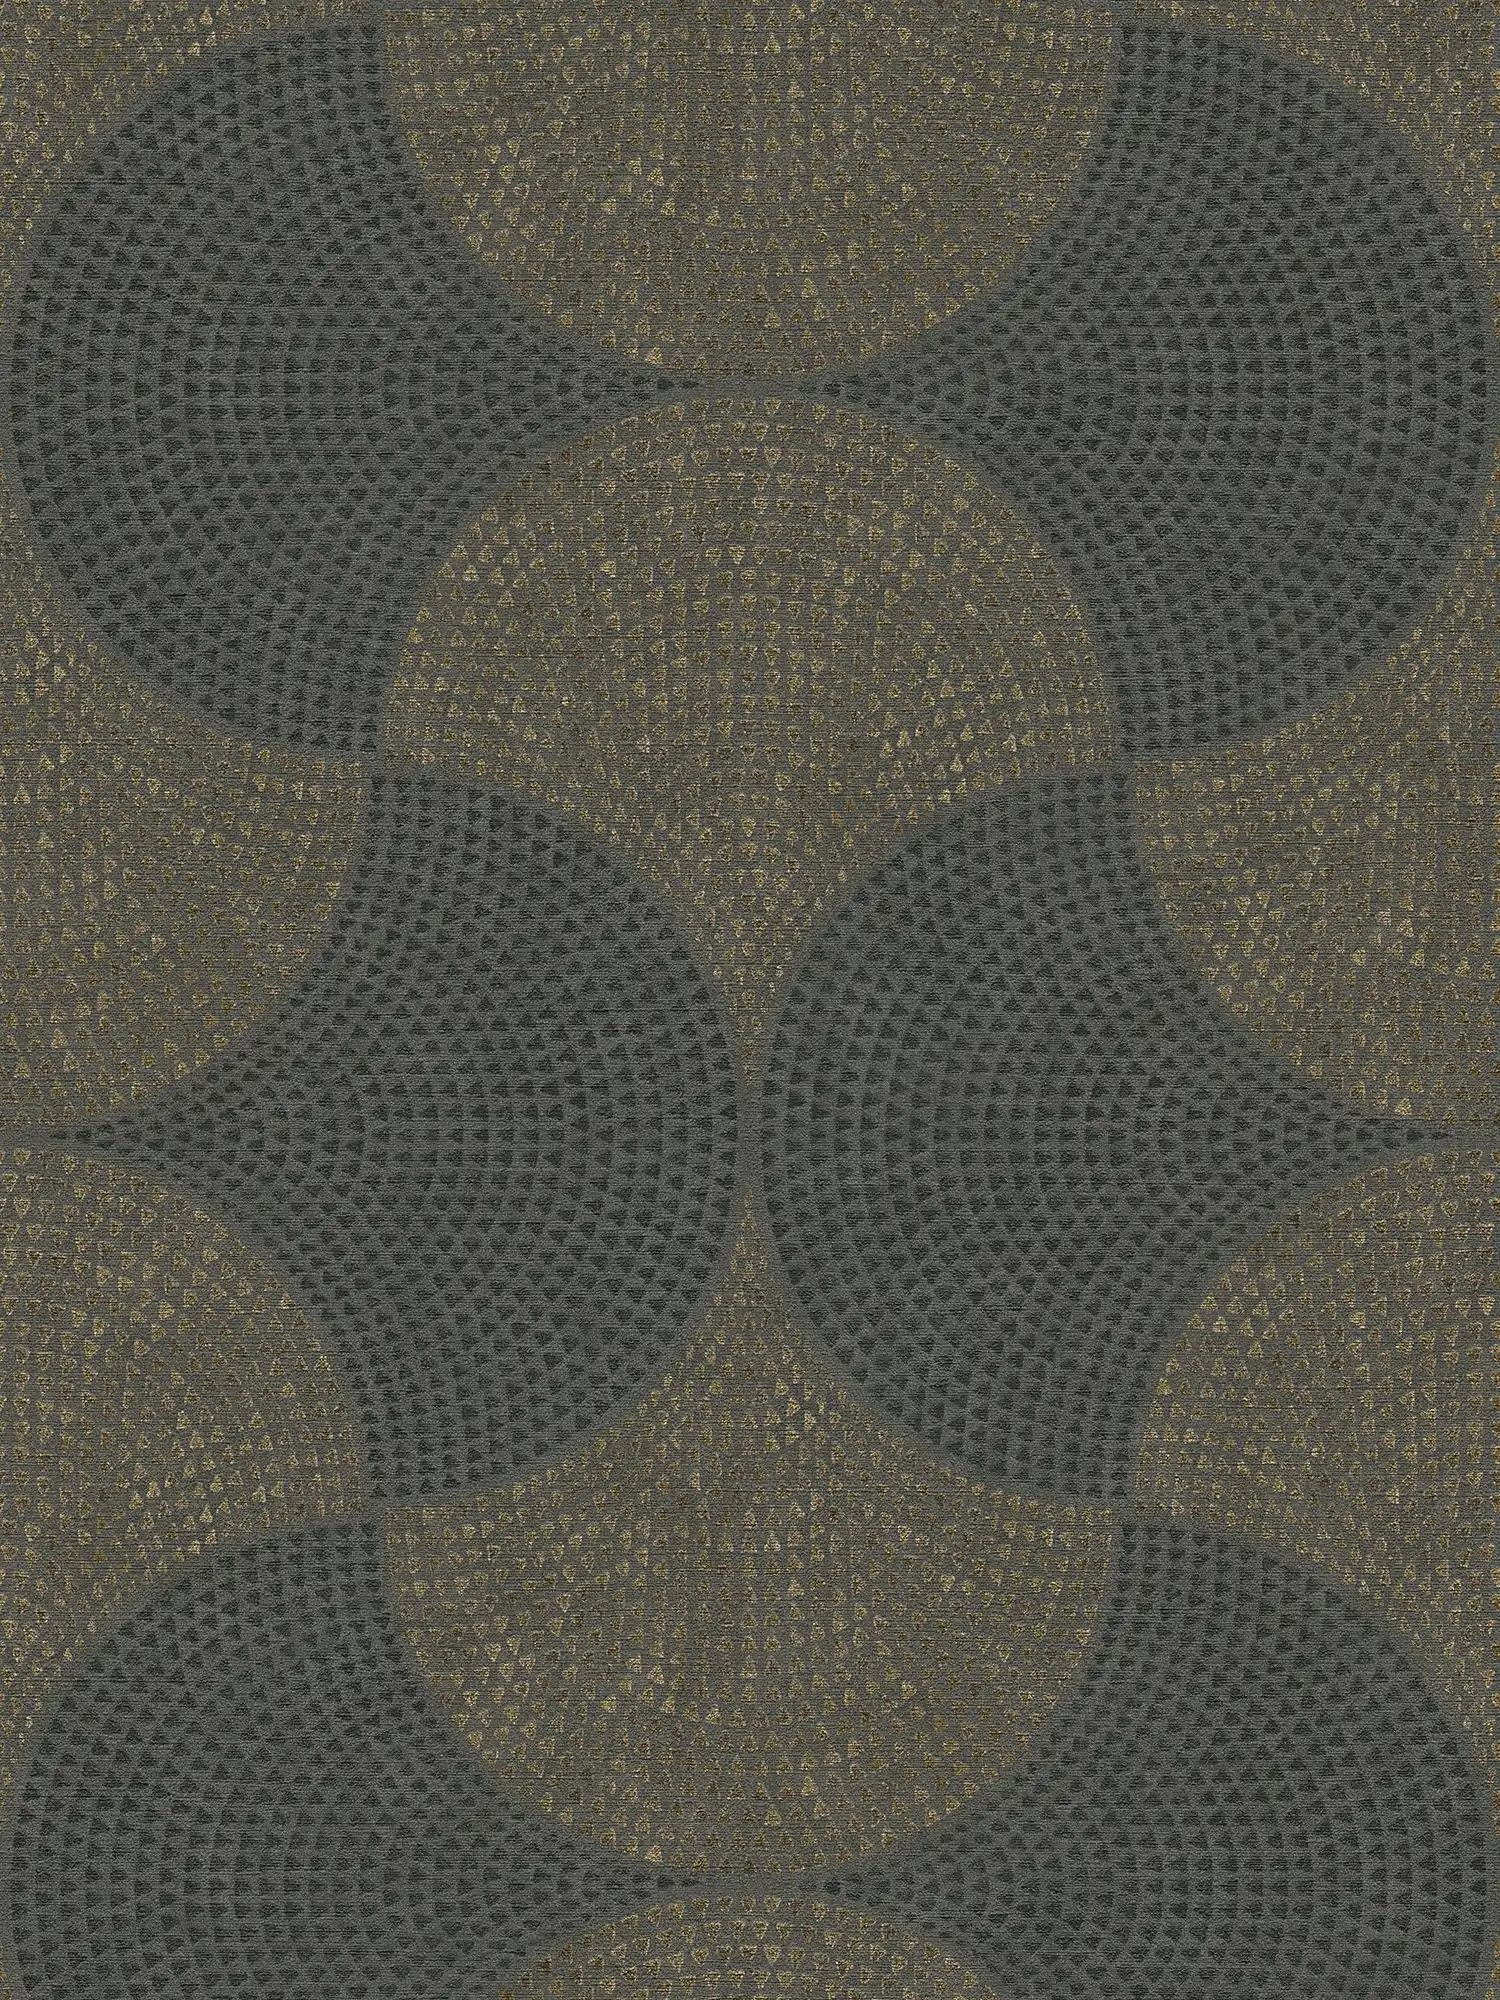 Wallpaper mosaic pattern with metallic effect & used look - grey, metallic
